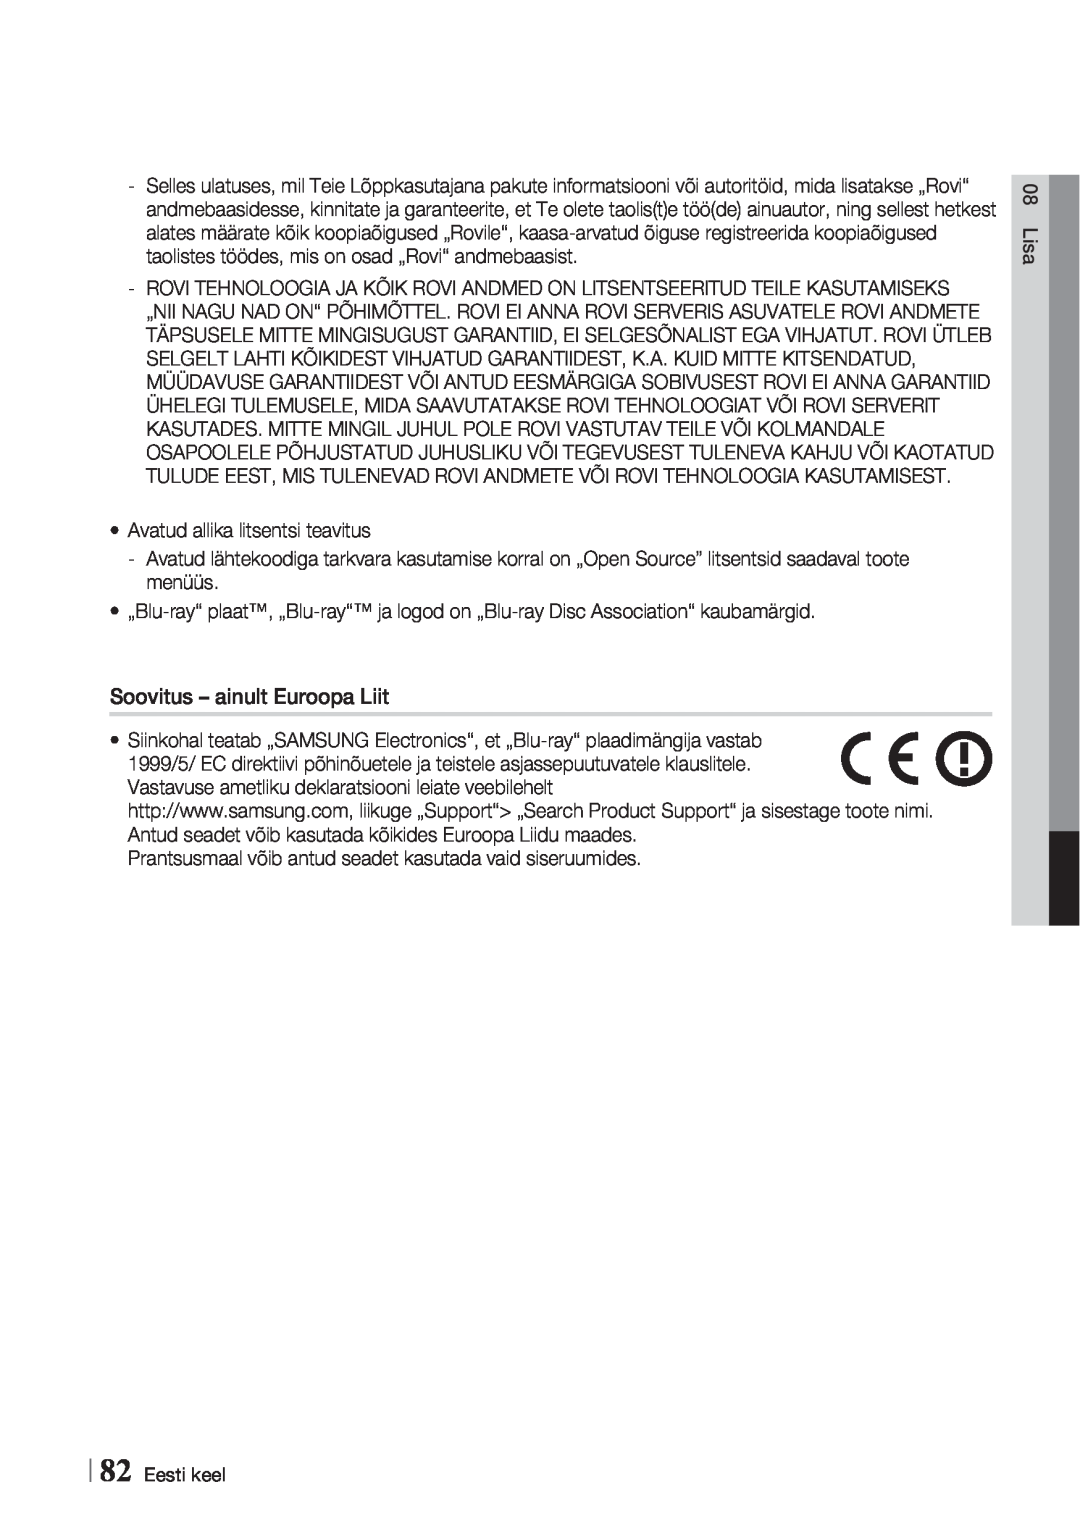 Samsung BD-E6300/EN manual Avatud allika litsentsi teavitus 